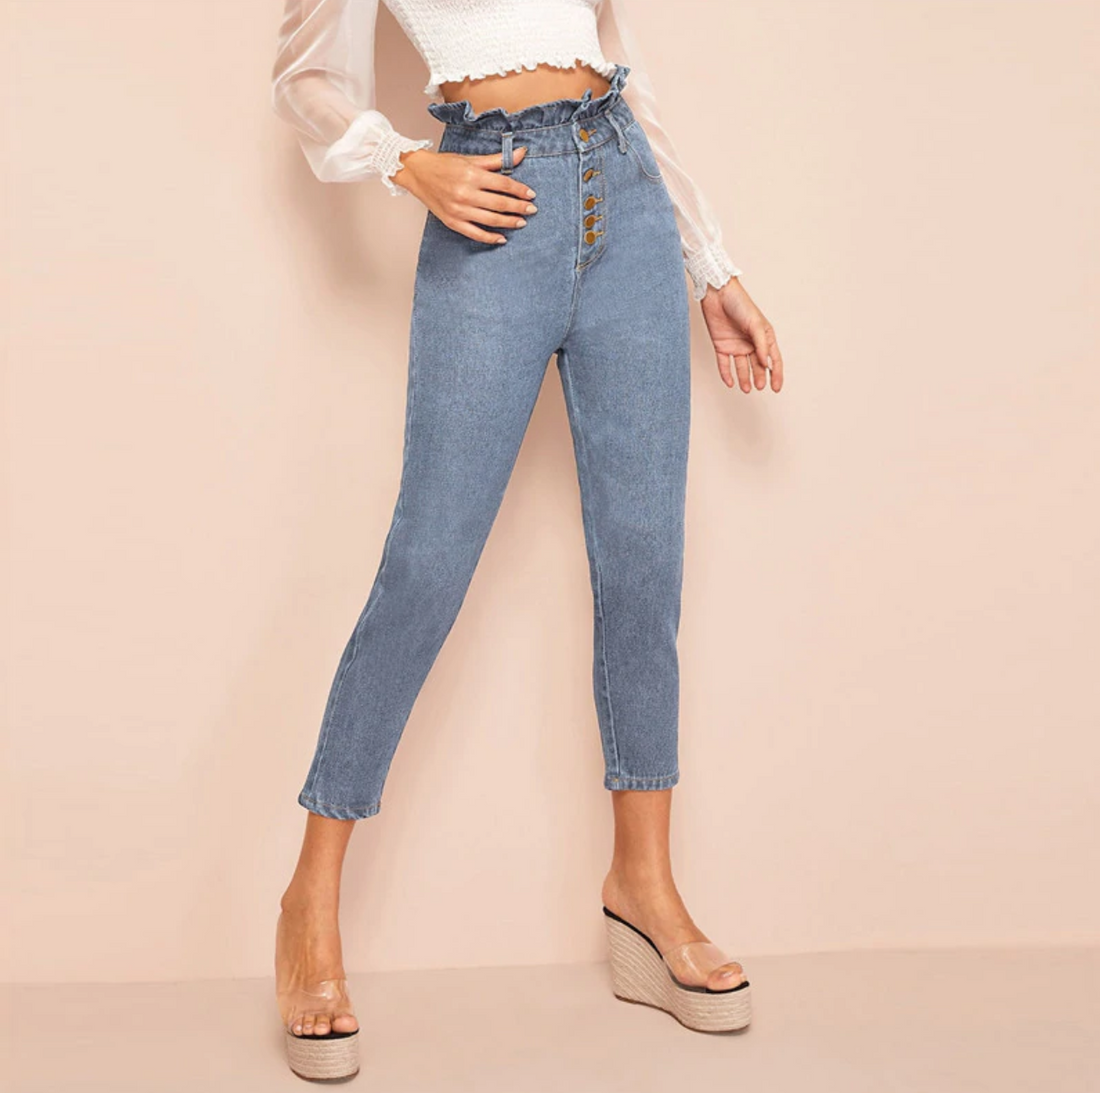 Women's Spring/Summer High-Waist Skinny Jeans